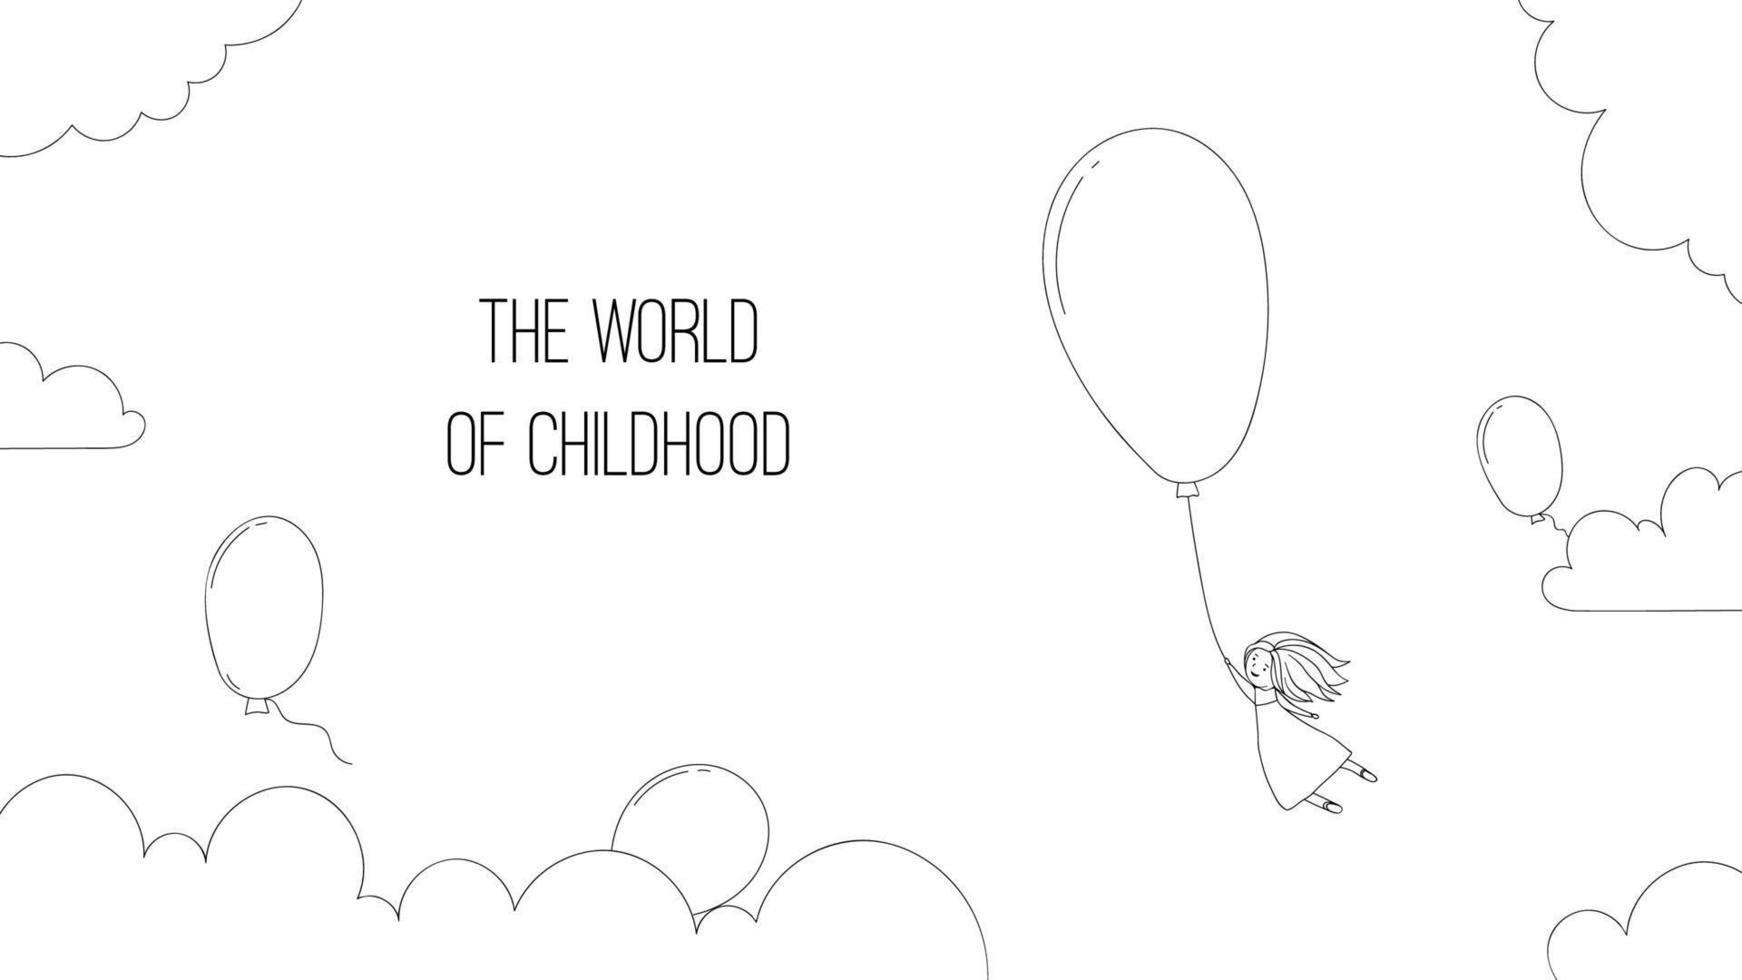 bandera para niños, un niña moscas en un globo. para un juguete o bebé ropa almacenar. infancia proteccion vector